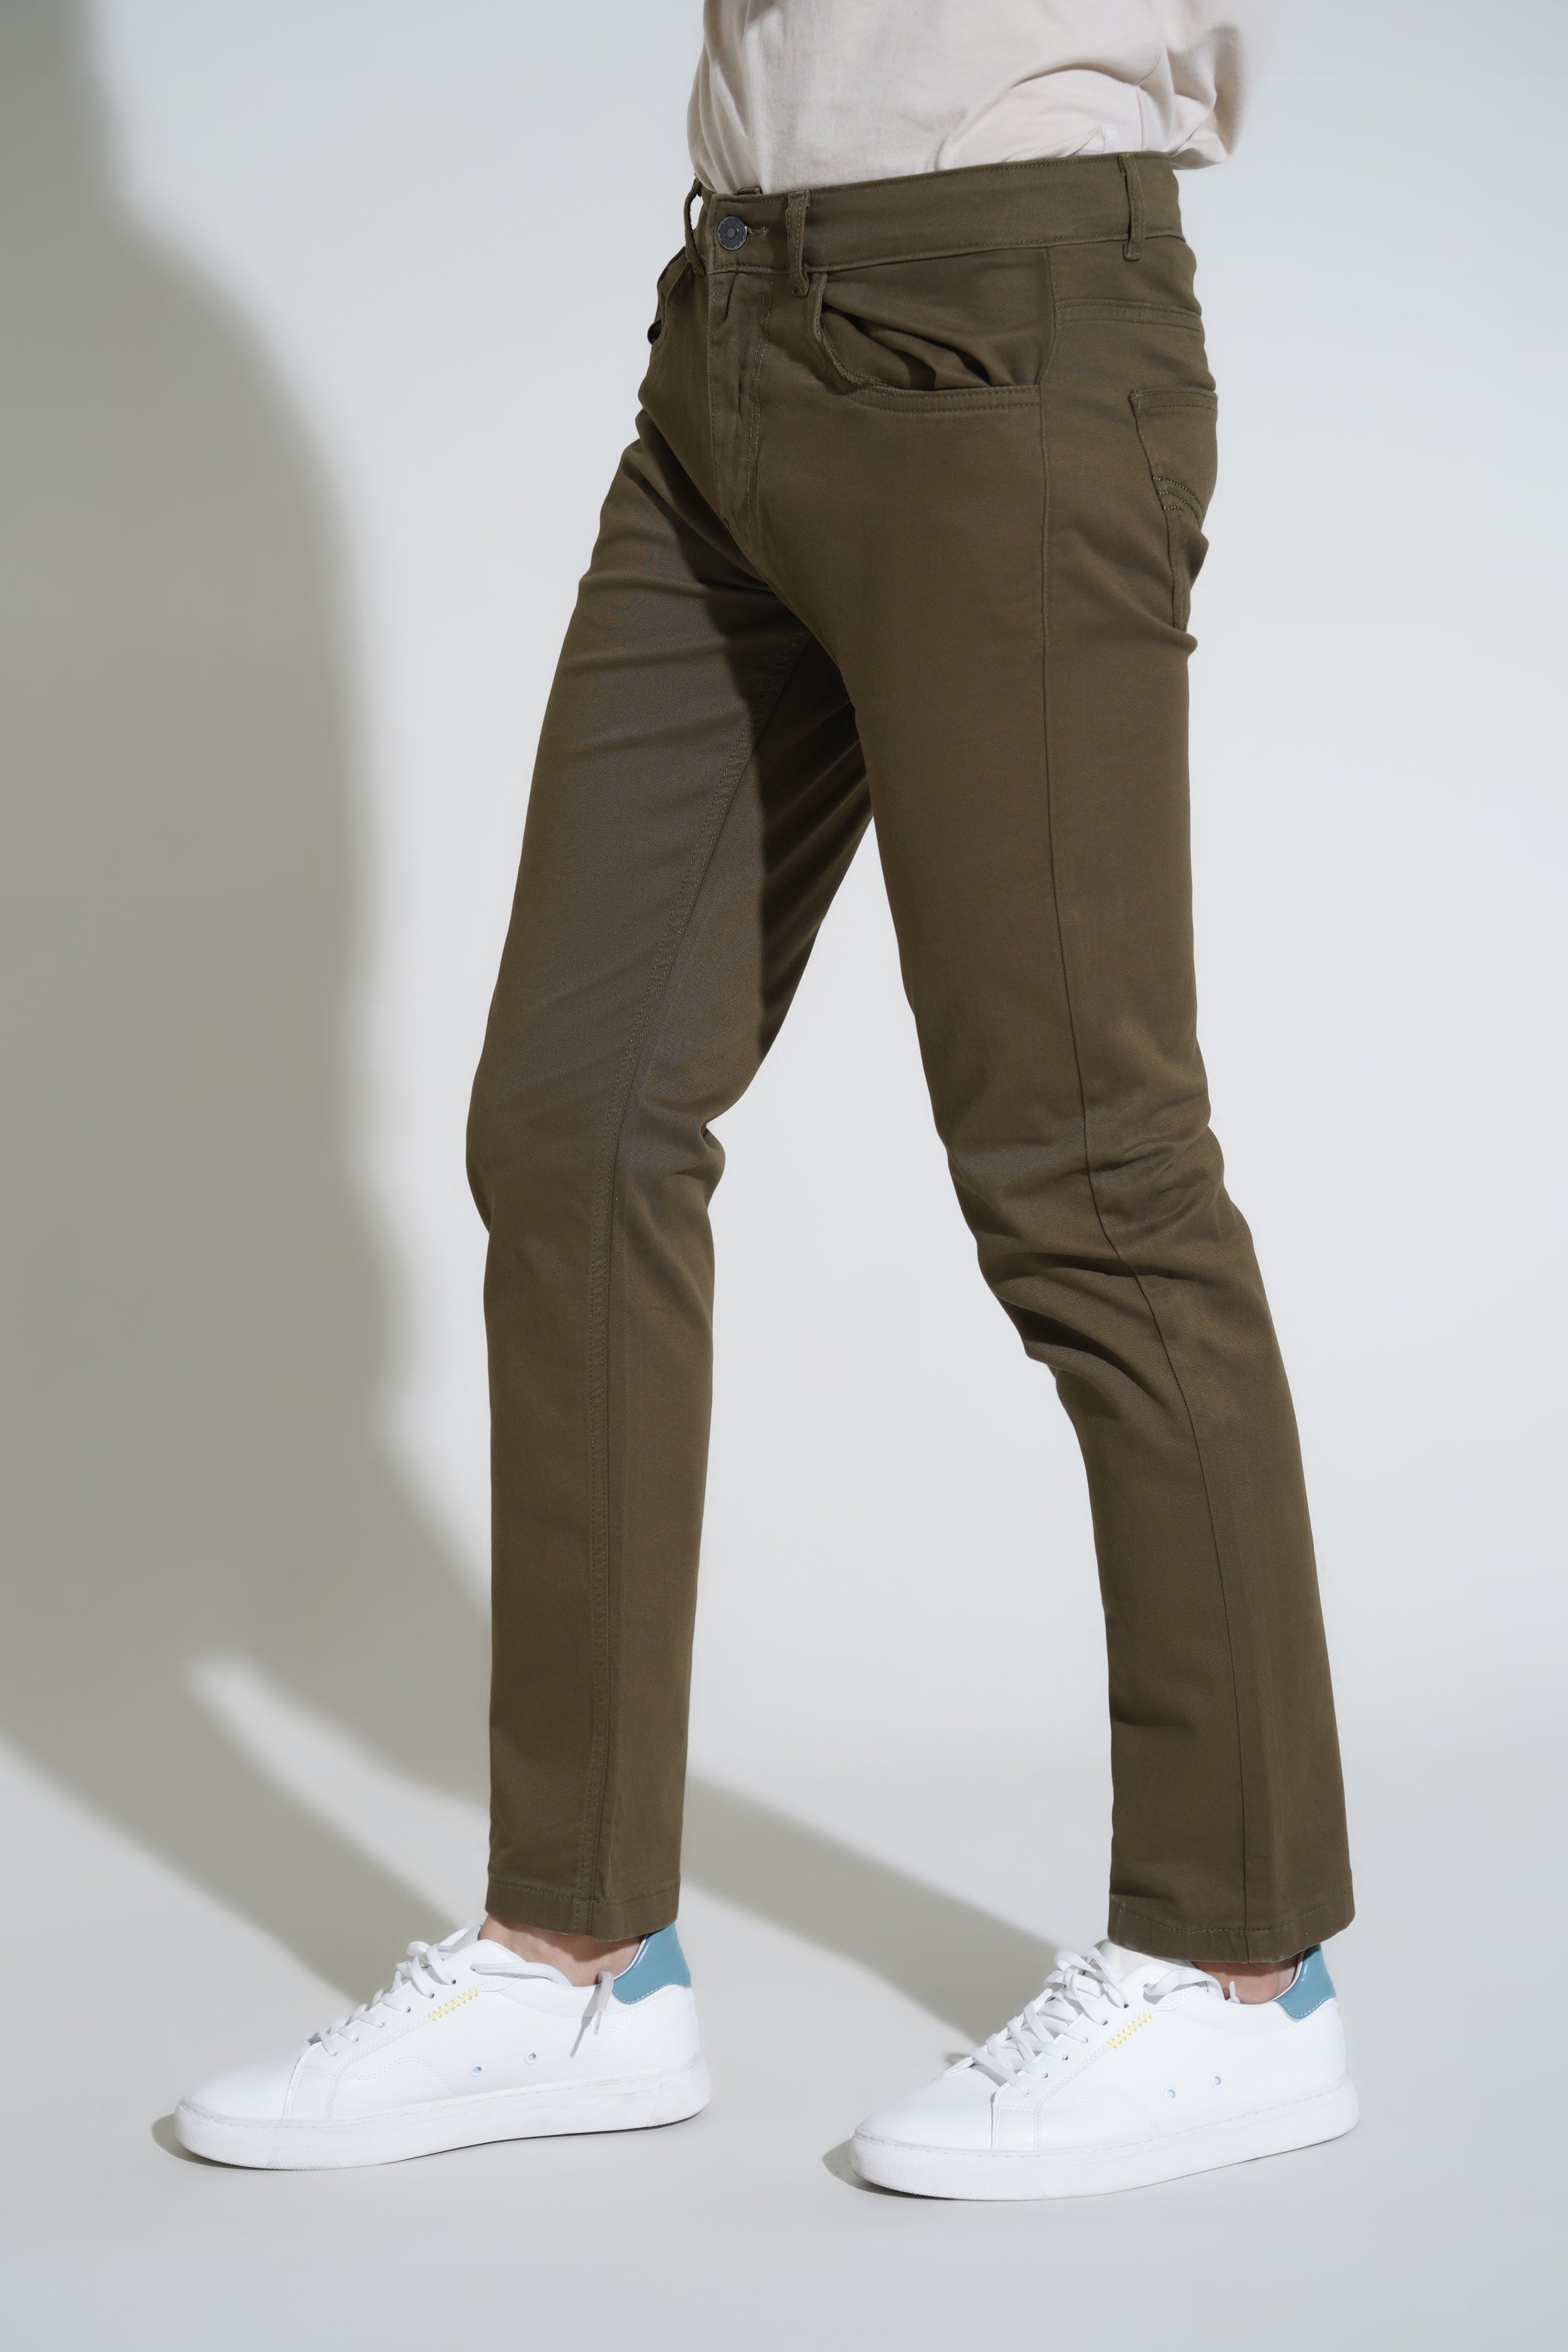 Buy Men Black Smart Fit Solid Casual Trousers Online - 785438 | Allen Solly